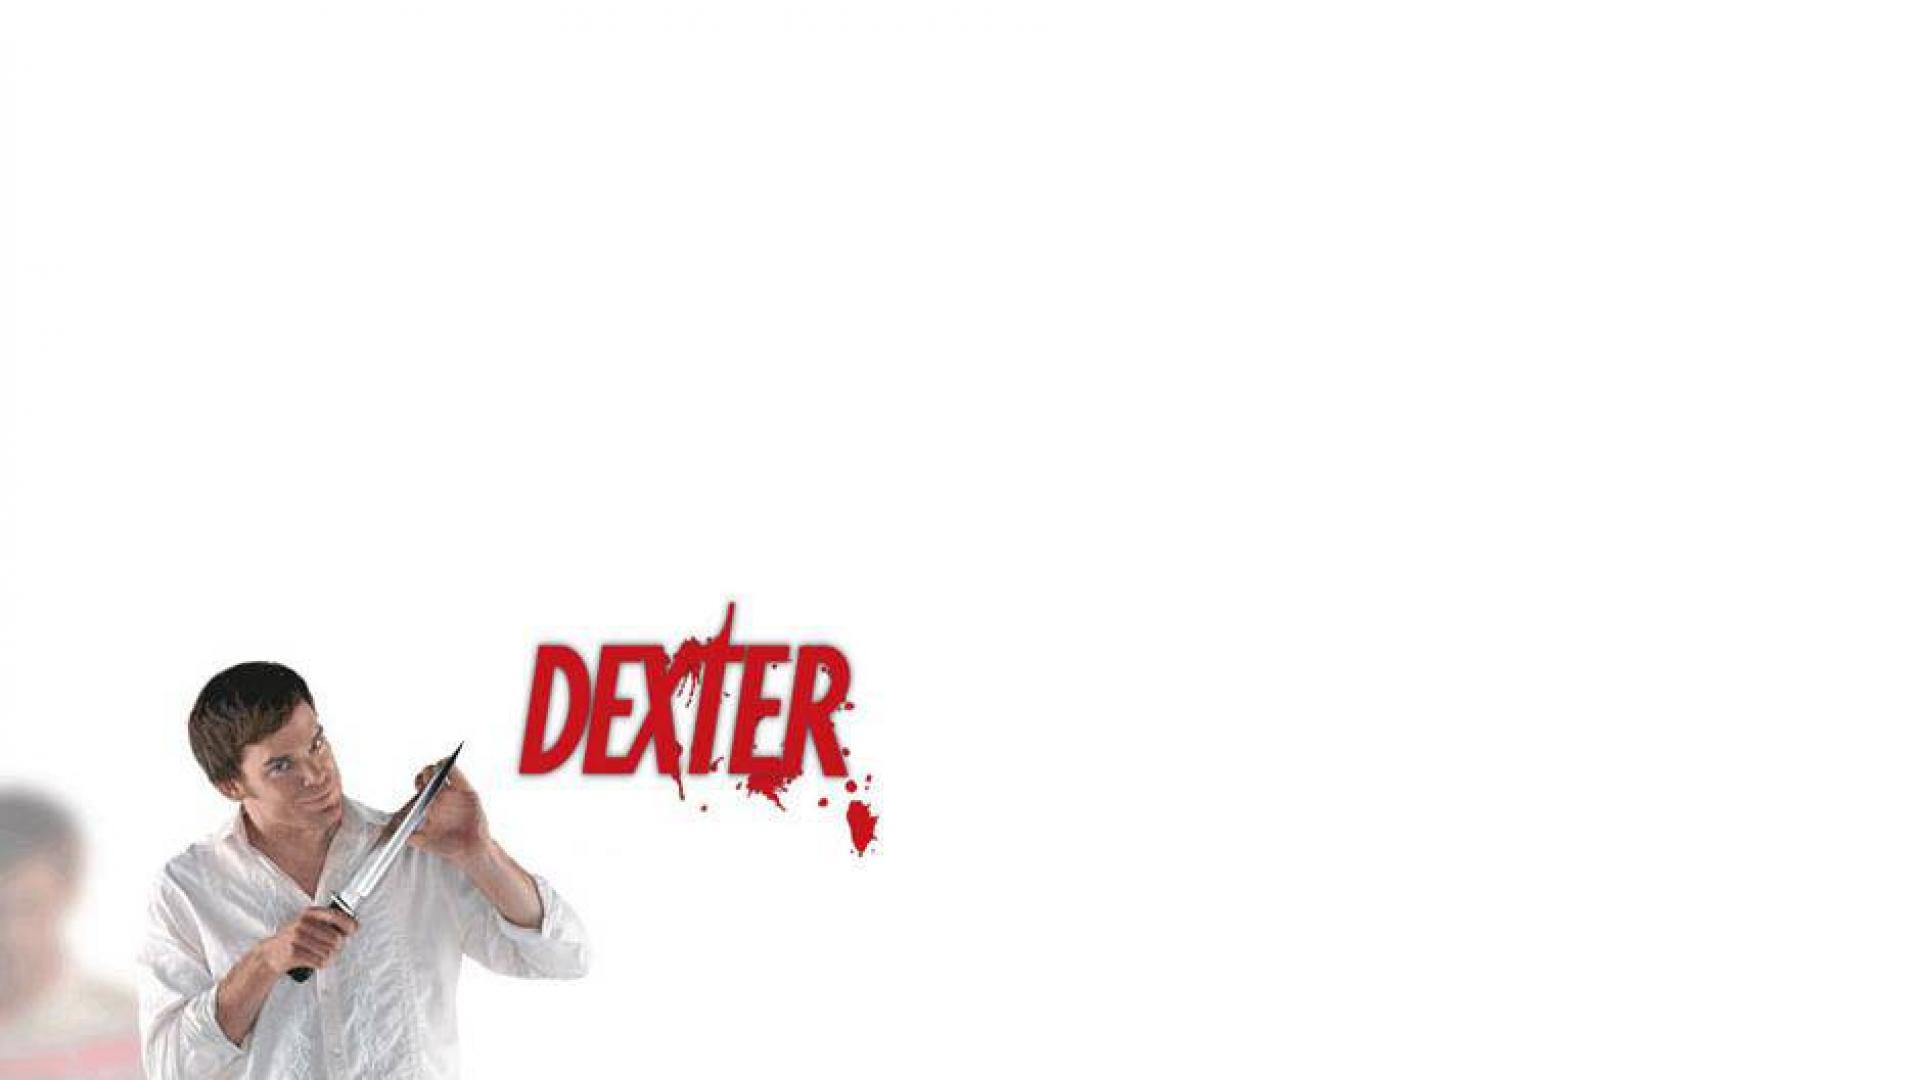 Dexter wallpaper [6] HQ WALLPAPER   6217